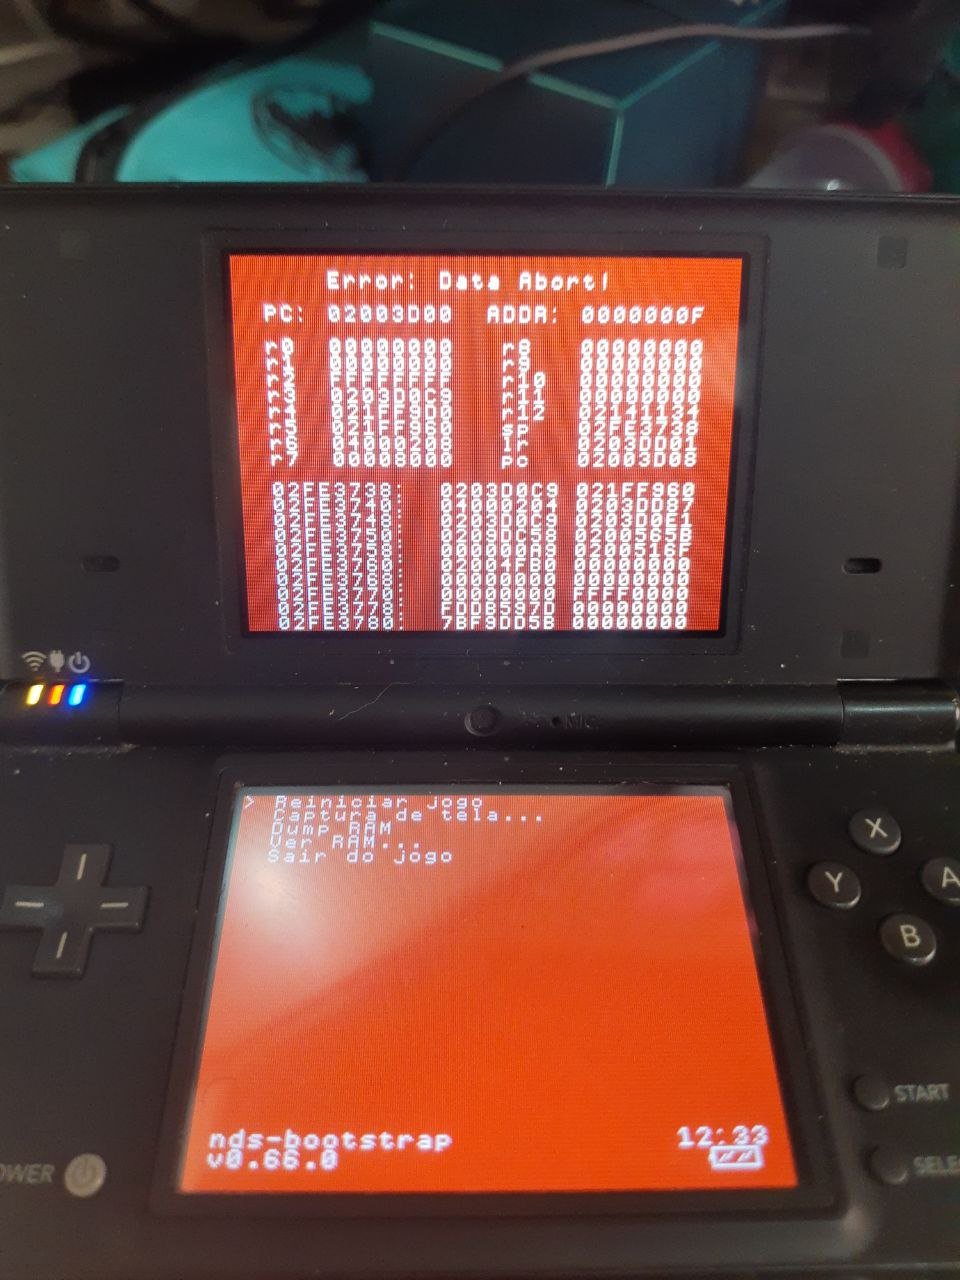 Pokemon Black Version (U) (Patched) ROM < NDS ROMs